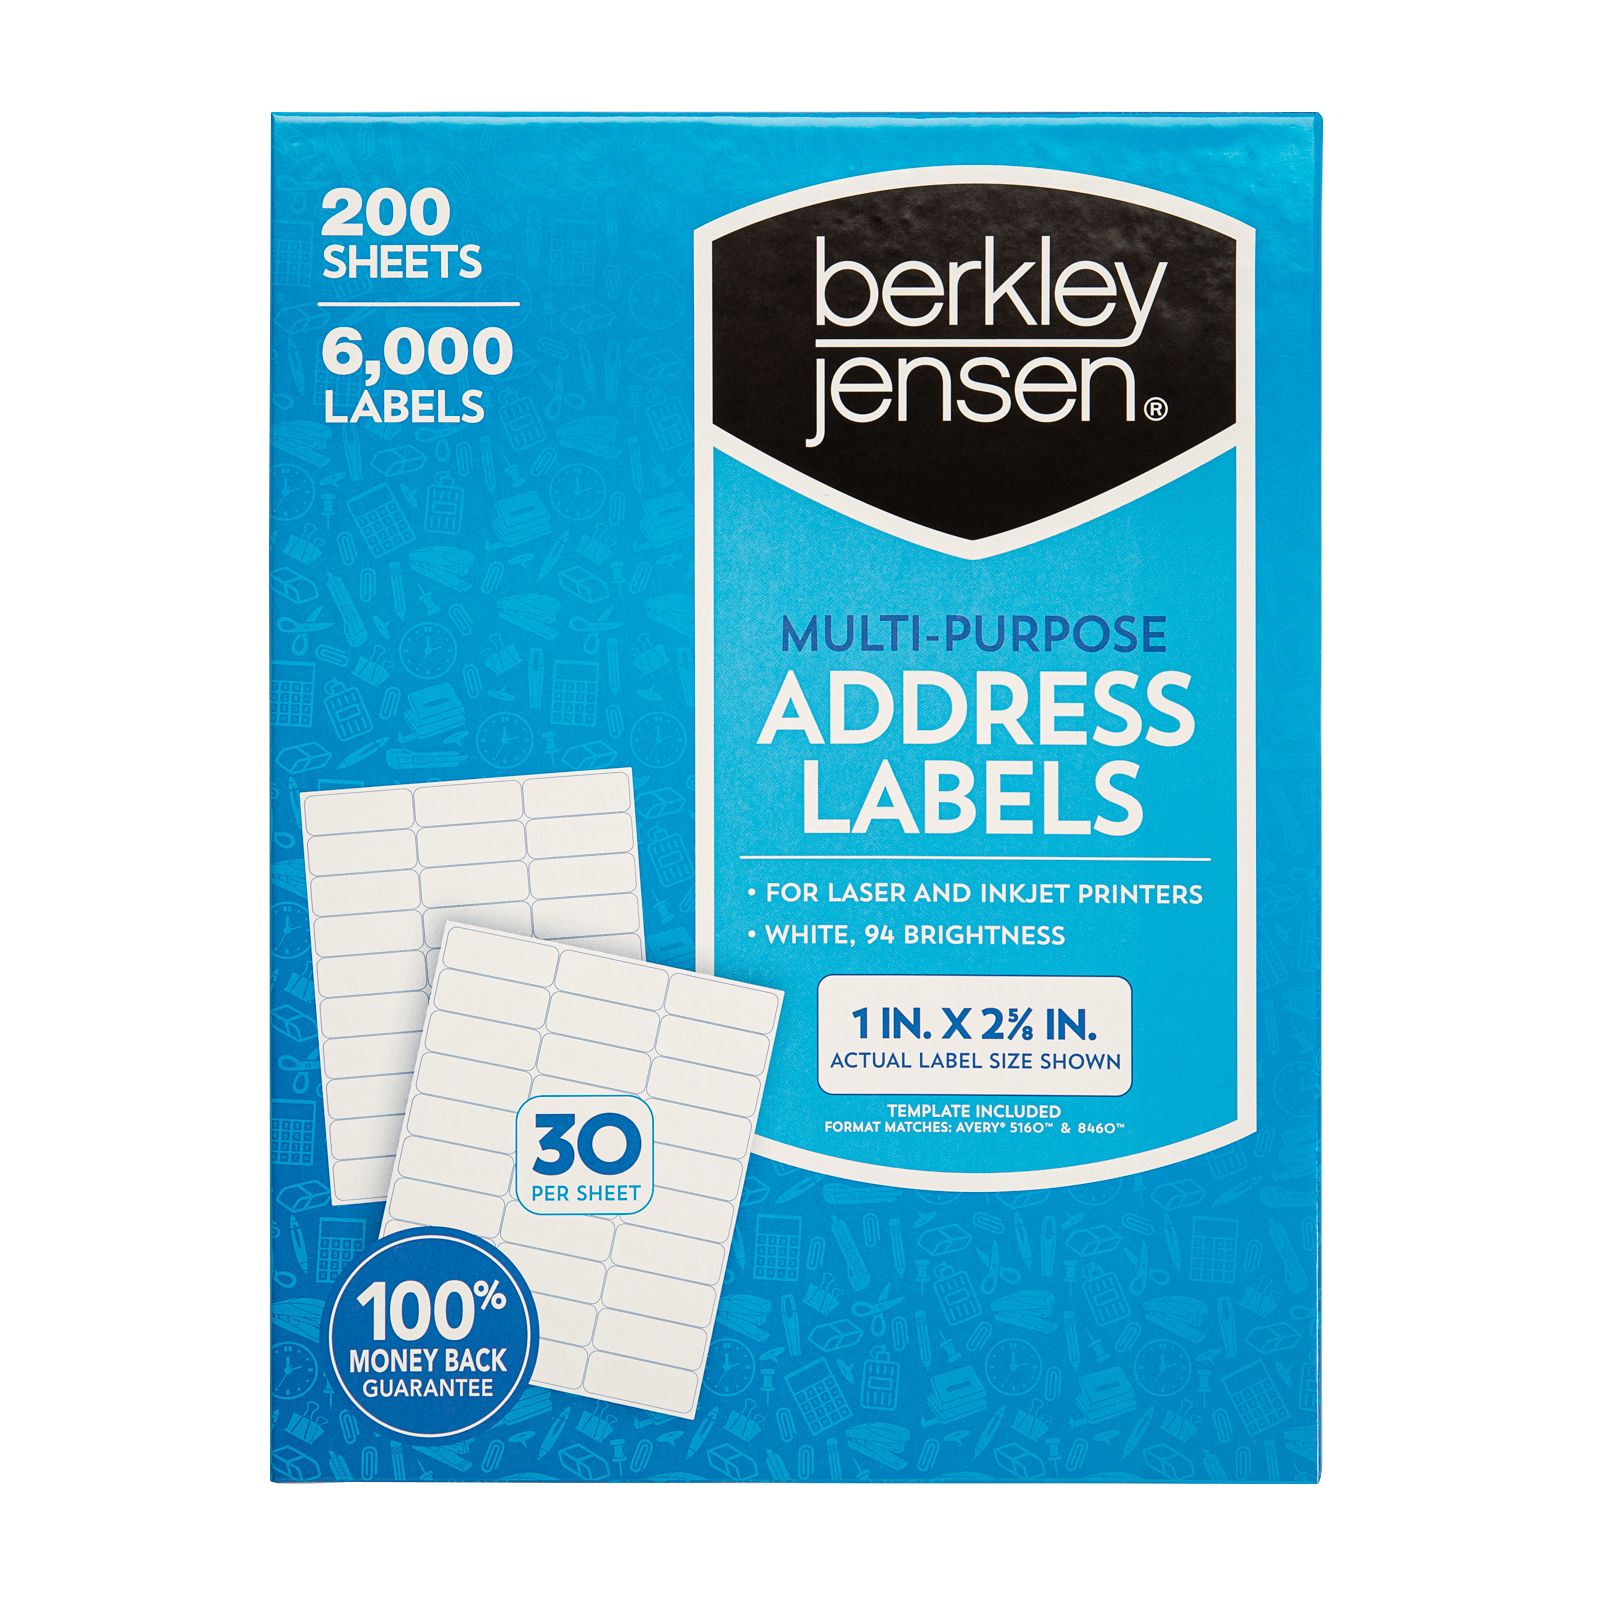 Berkley Jensen Multi-Purpose Address Labels, 6,000 ct.